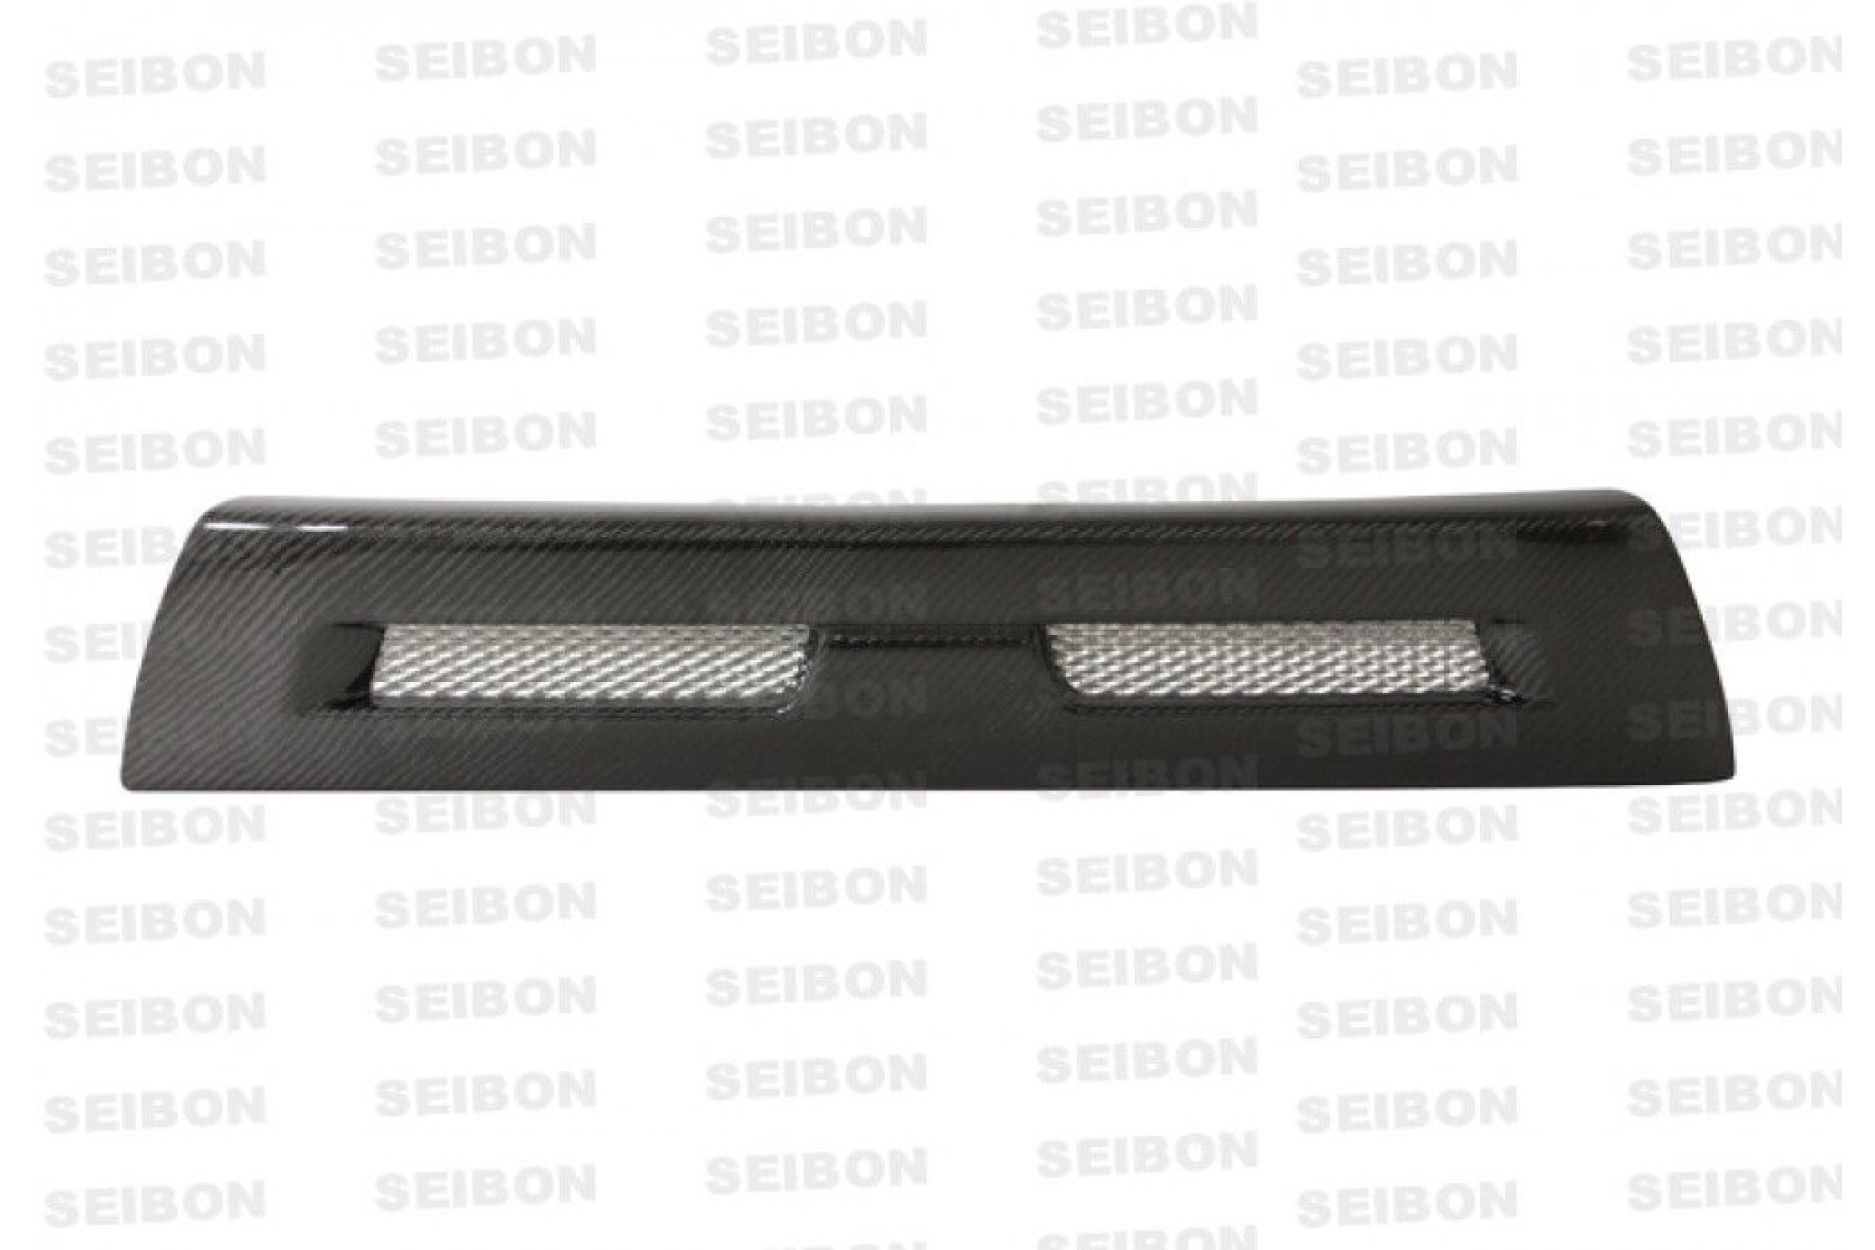 Seibon carbon GRILLE (Shaved) for MITSUBISHI LANCER EVO X 2008 - 2012 S-style